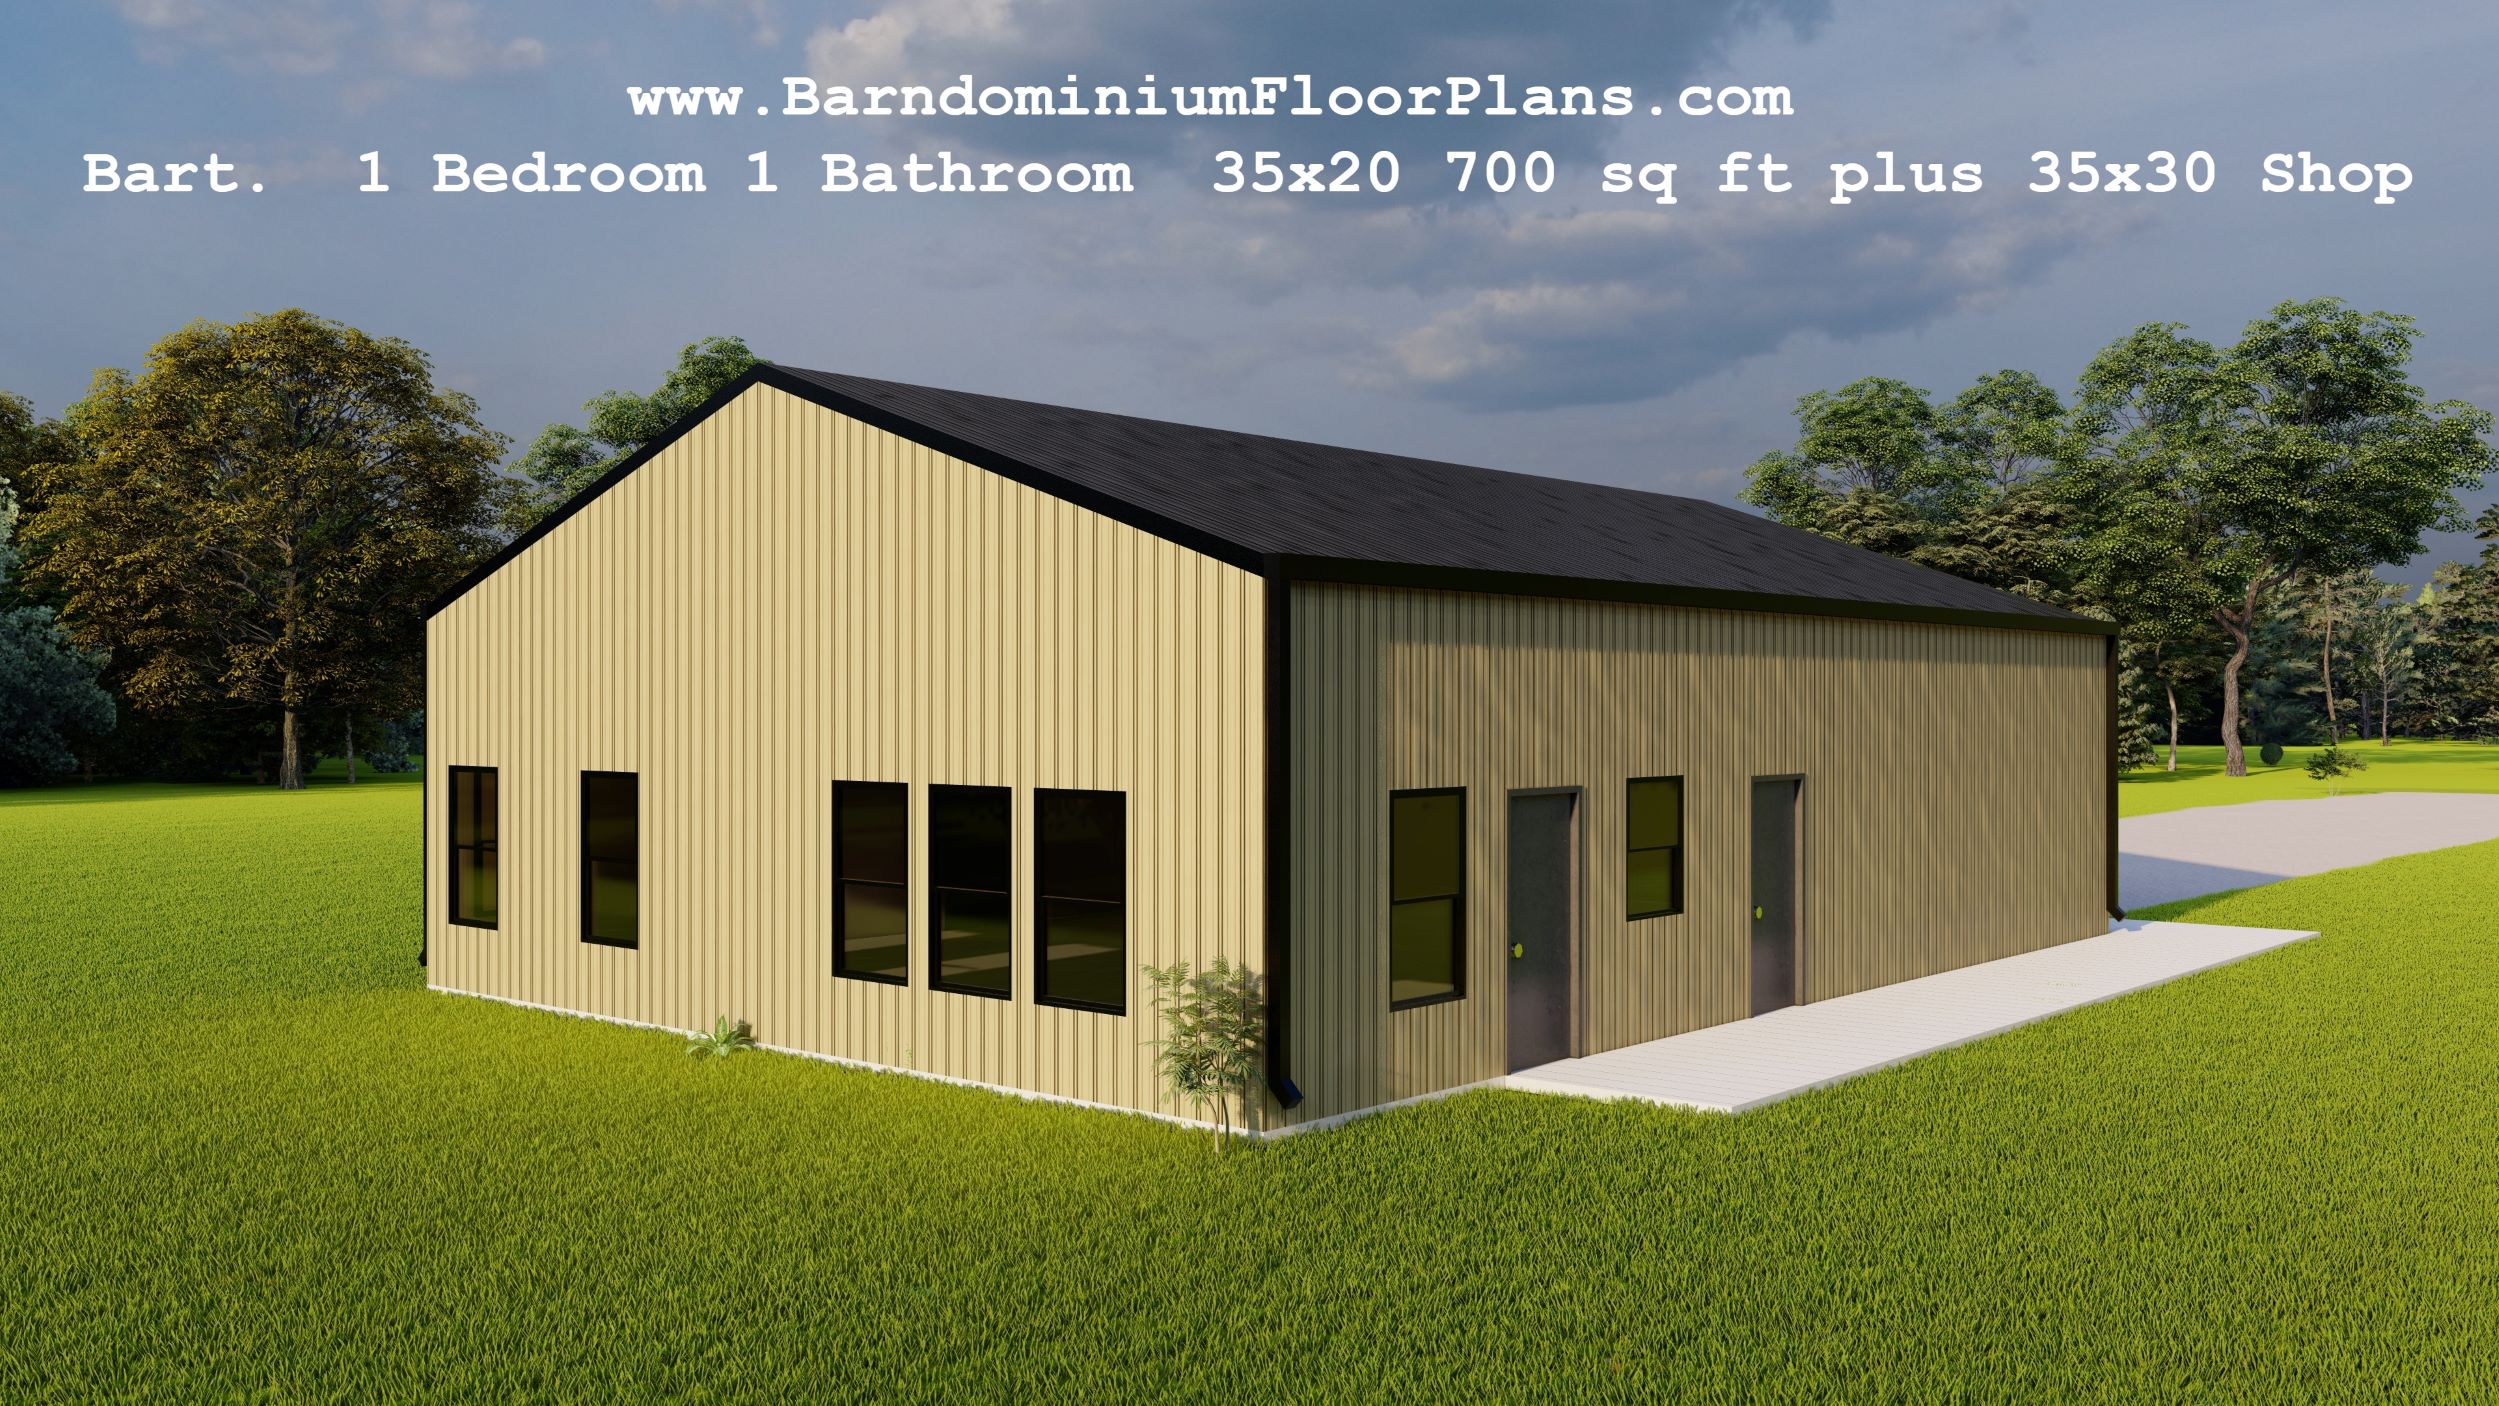 bart-barndominium-3d-rendering-leftview-700-sq-ft-1bed-1bath-with-laundry-closet-plus-shop-1